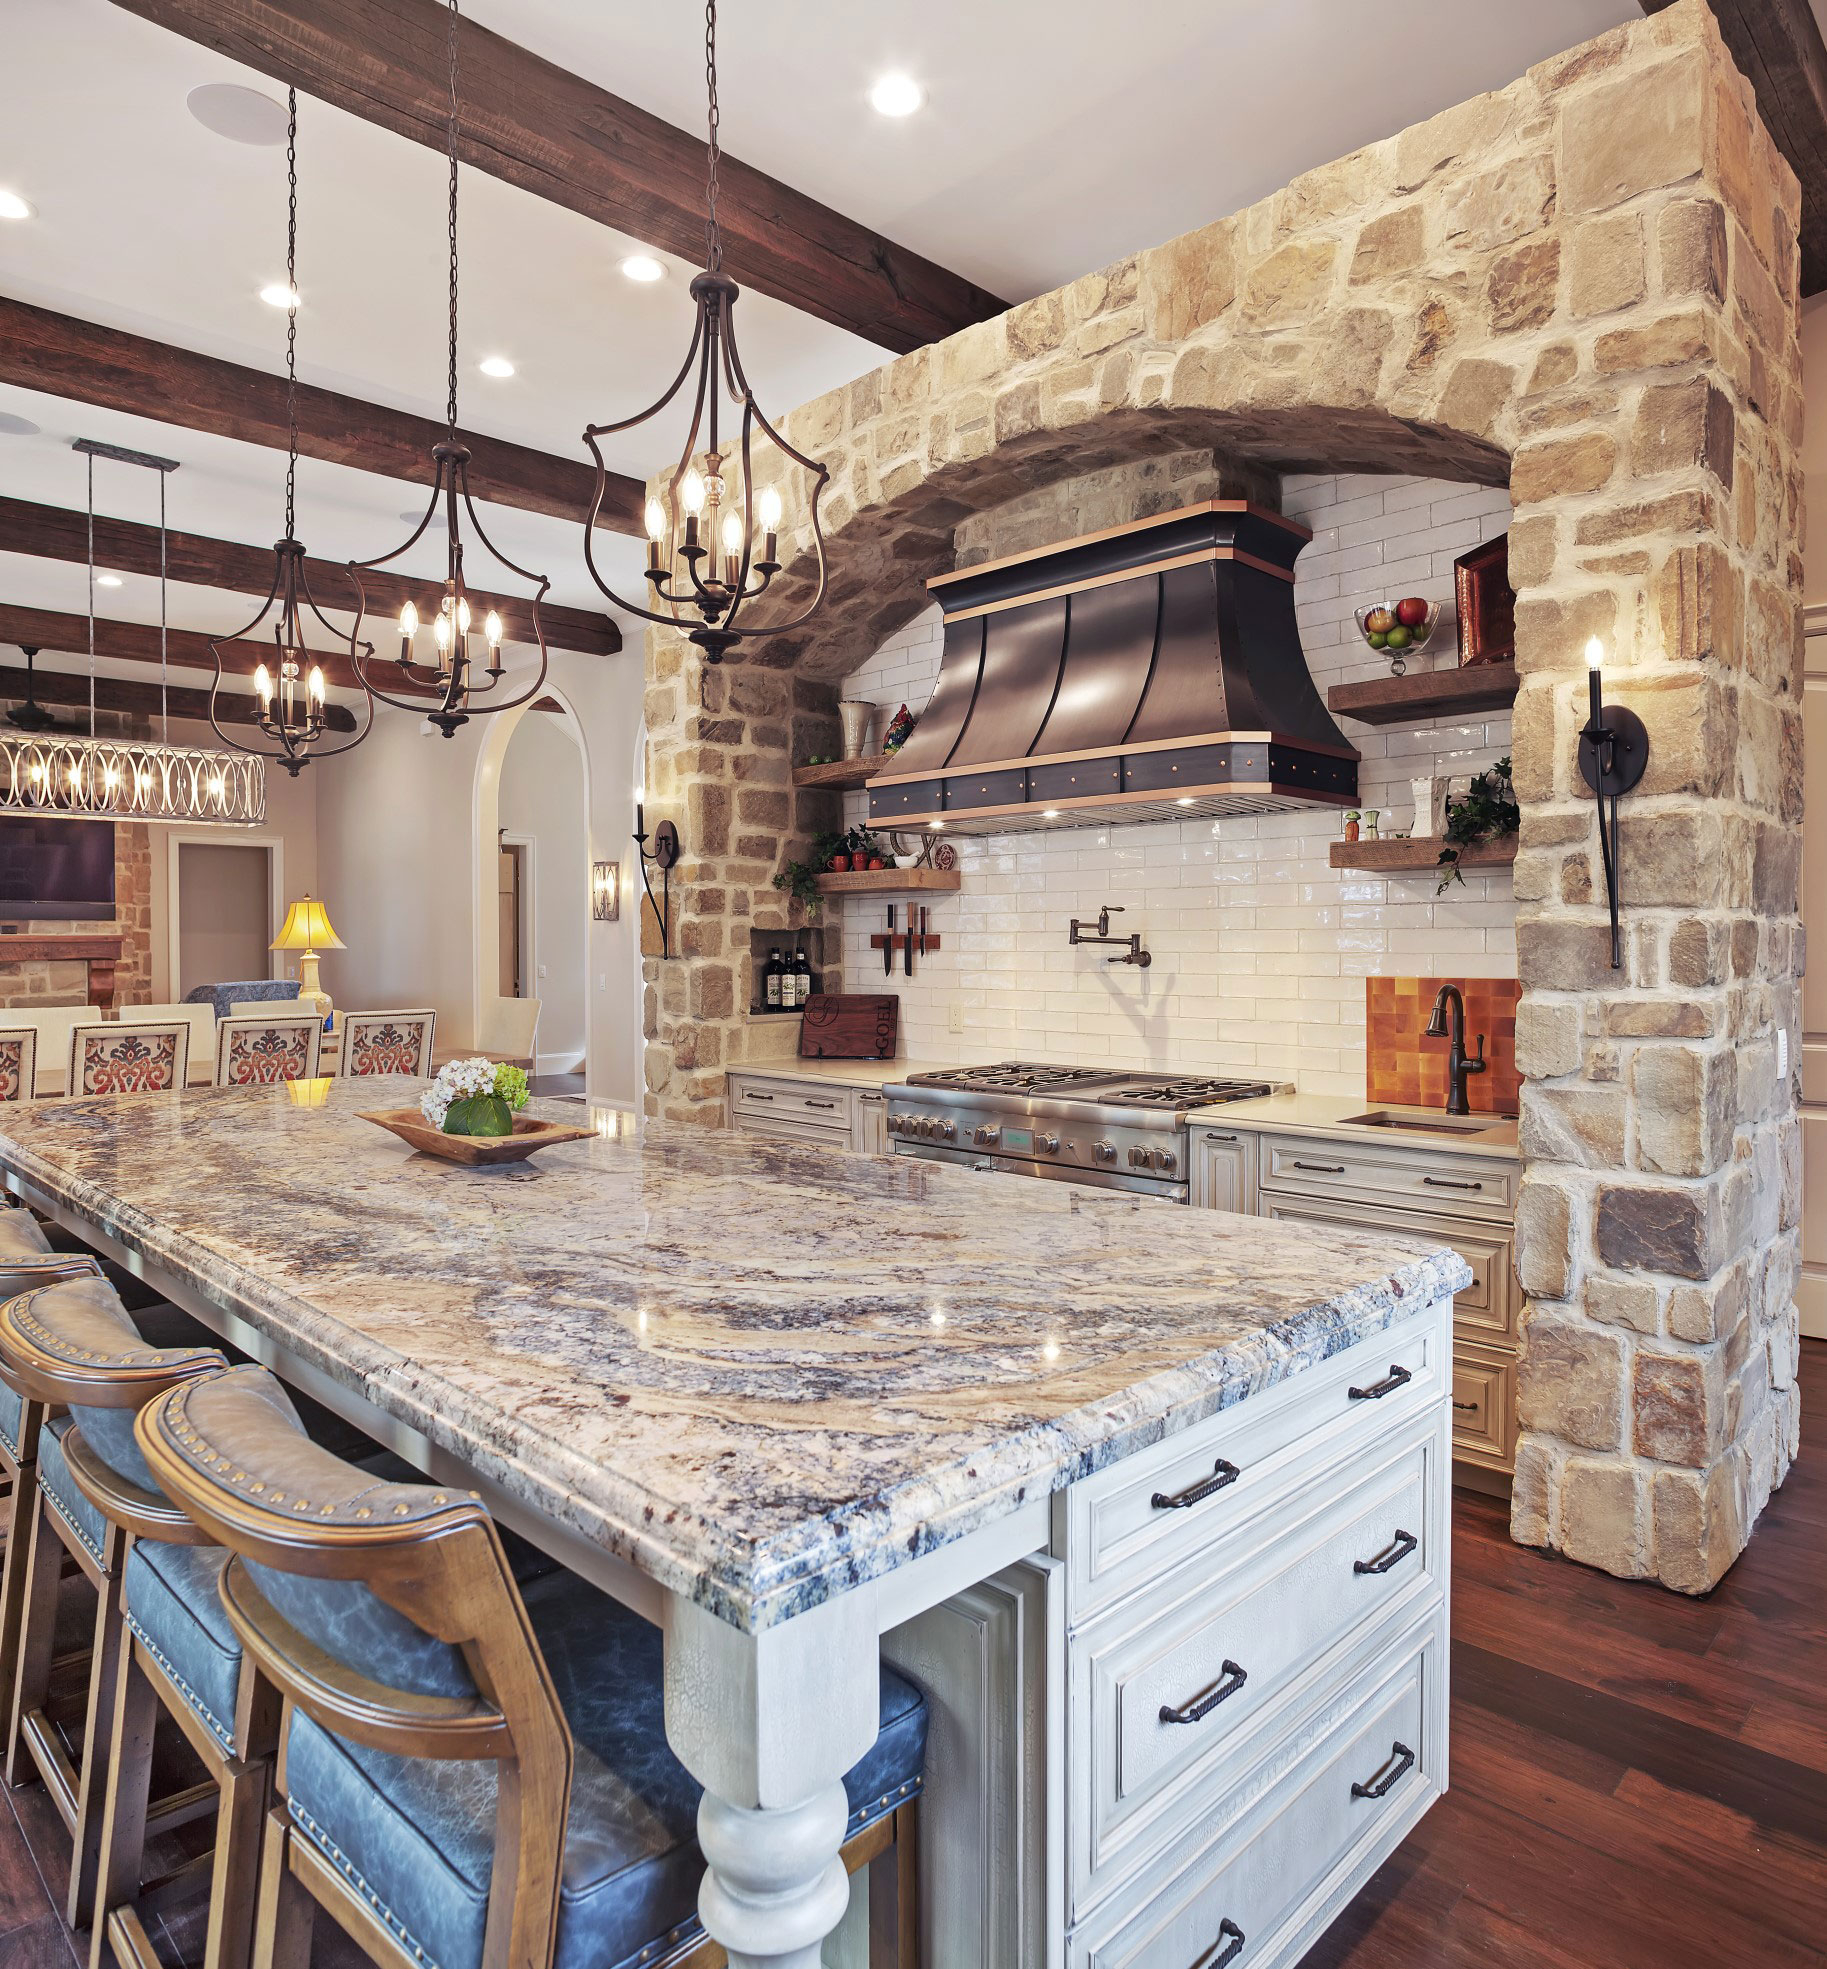 Charming cottage kitchen design with stylish range hood brown kitchen cabinets with marble kitchen countertops and brick backsplash